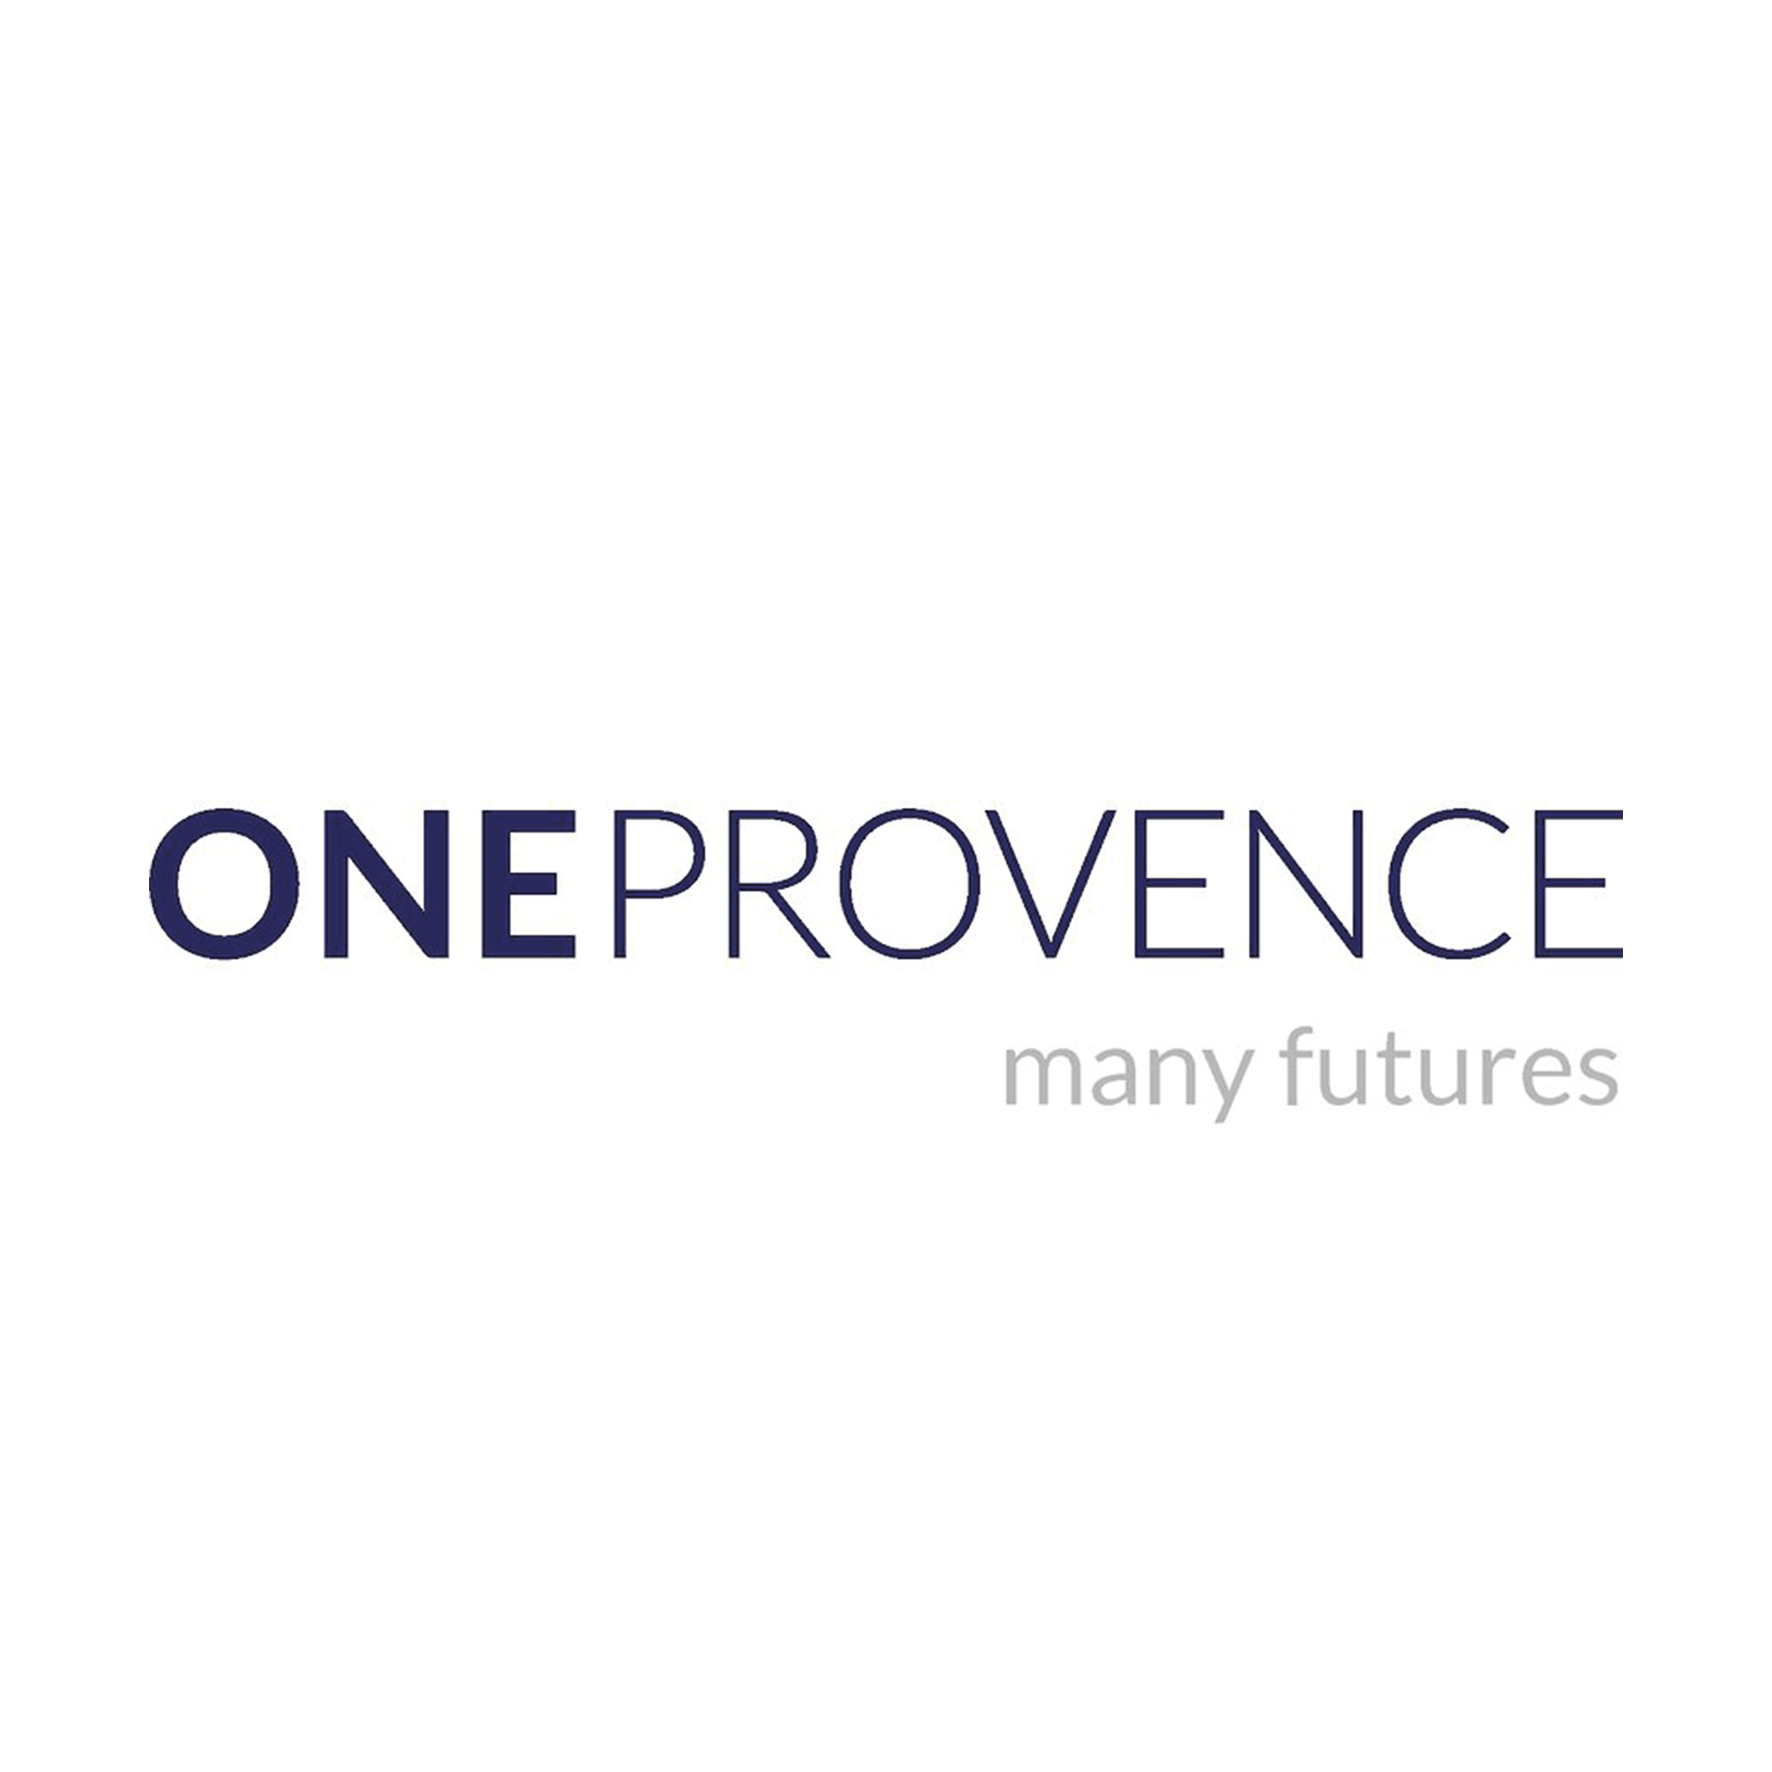 One Provence 1772x1772 CMJN